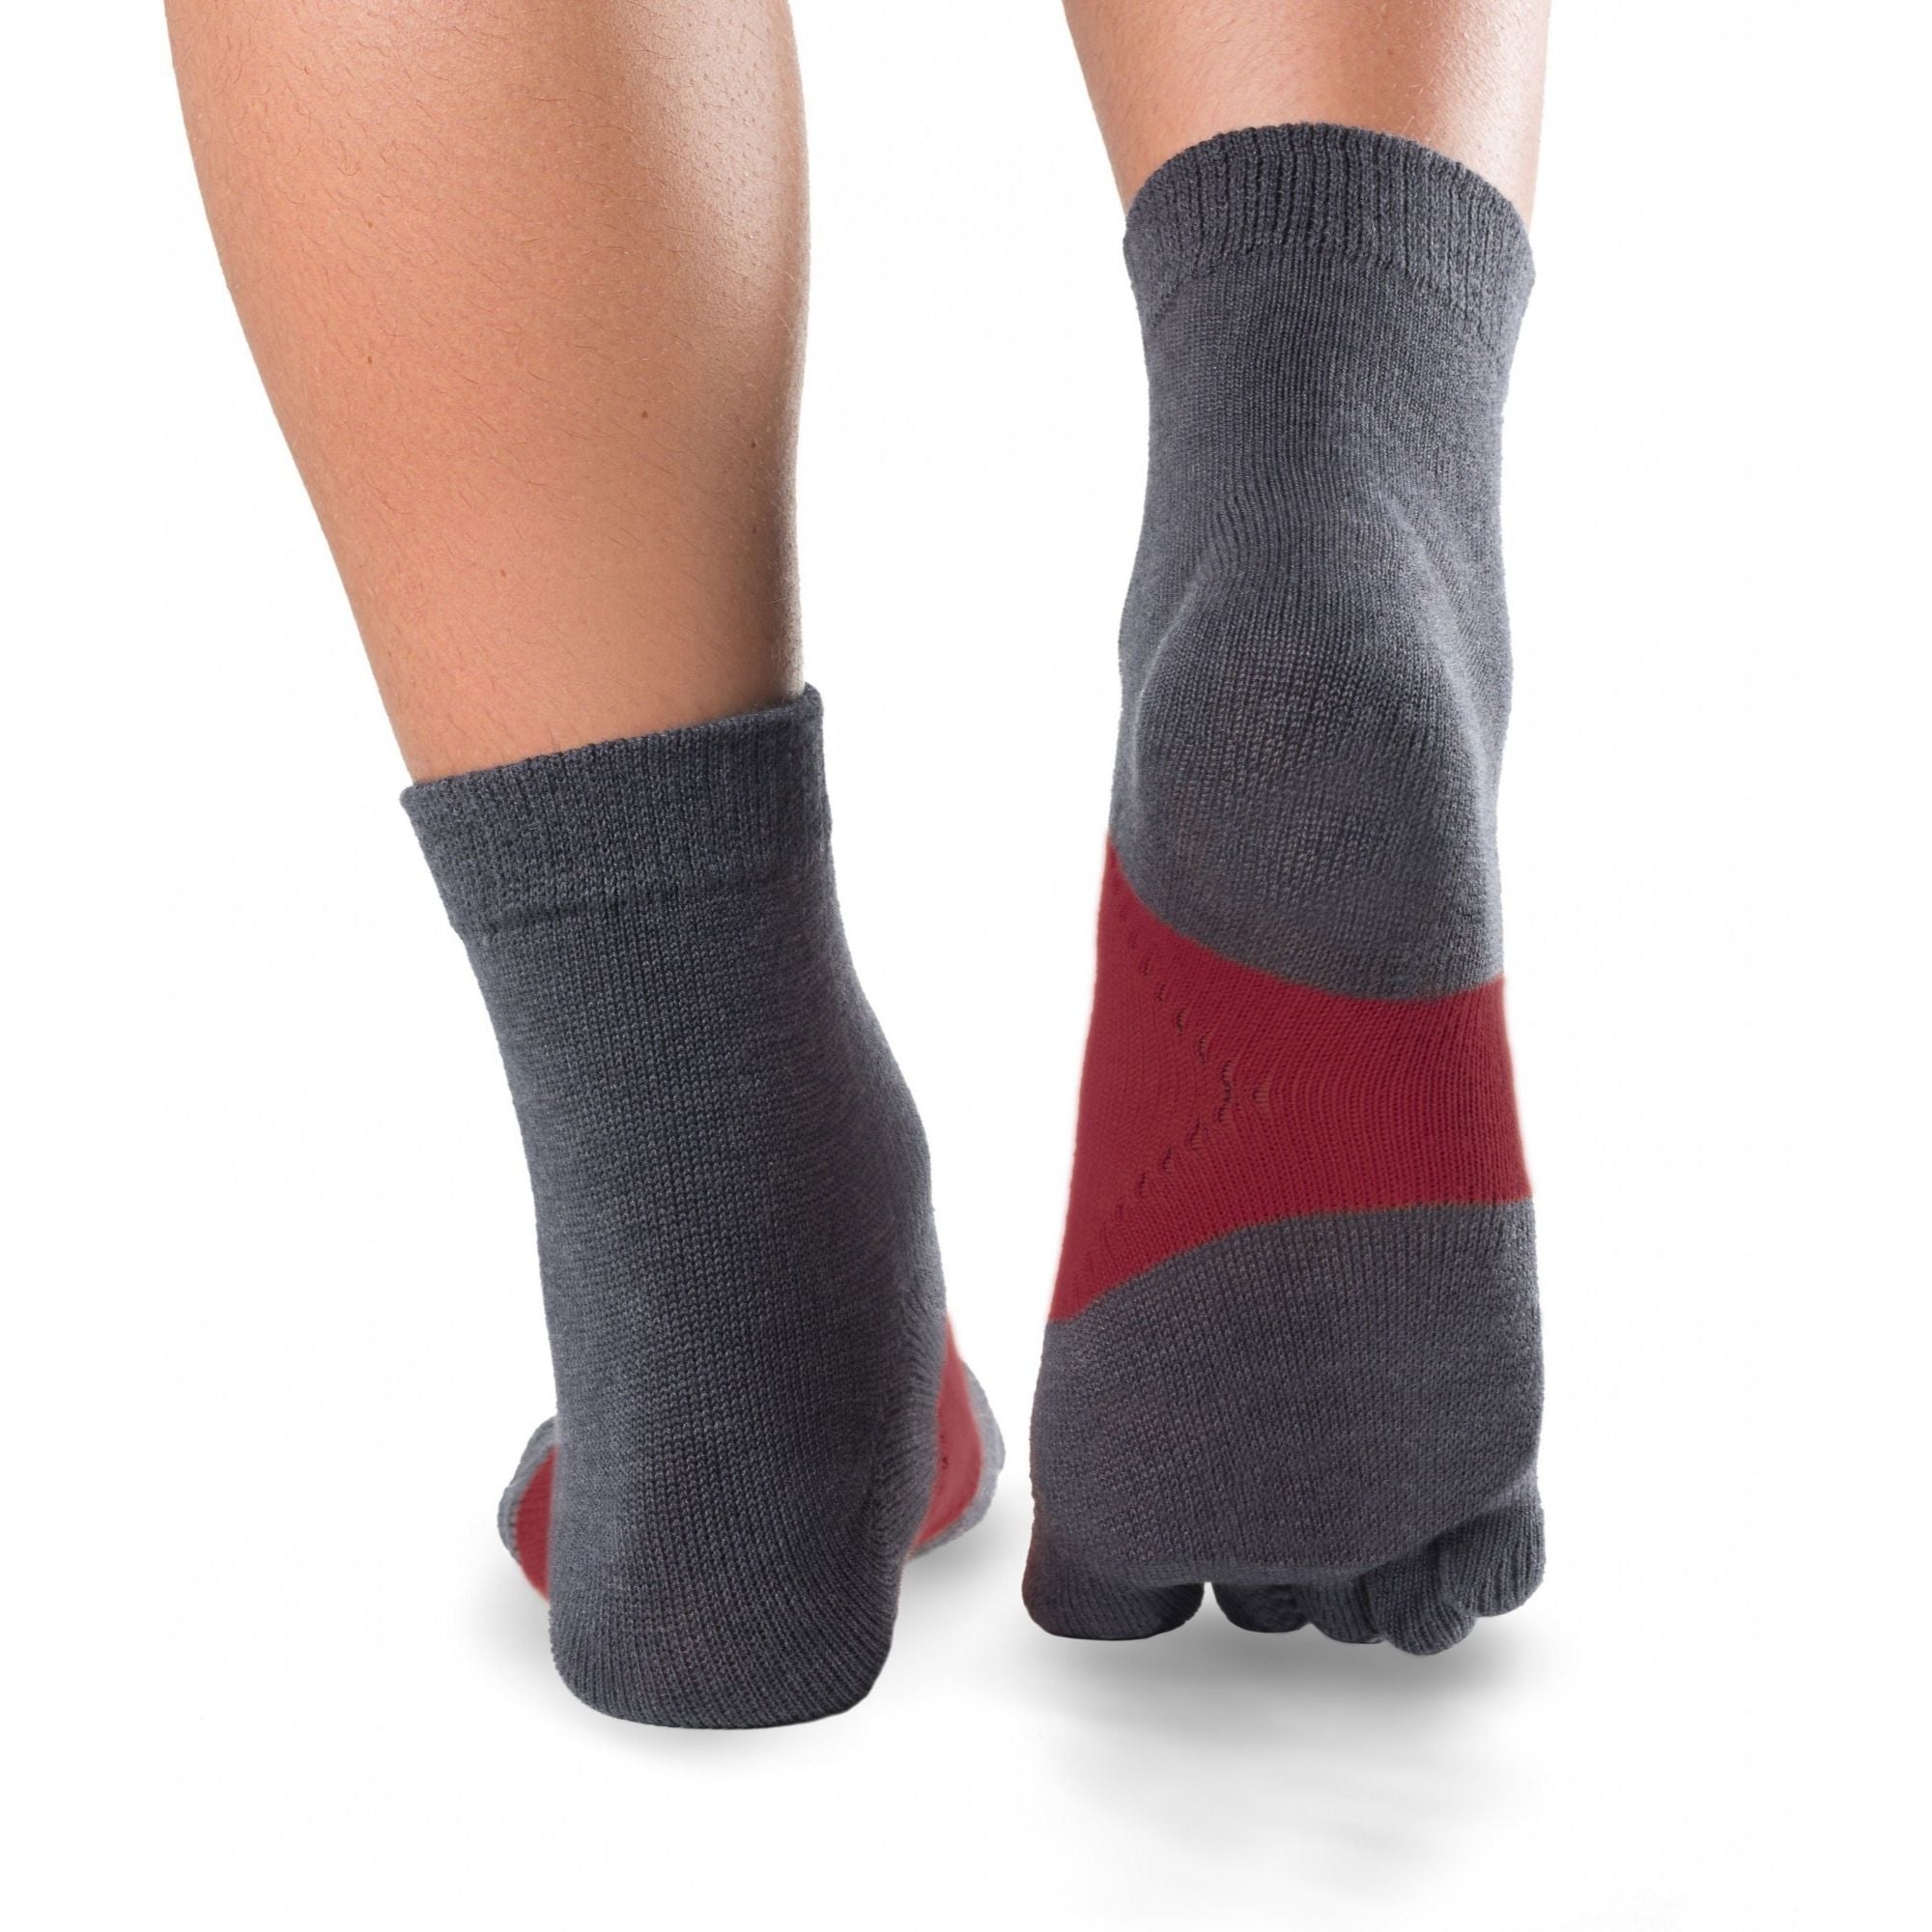 Calcetines de running TS - los calcetines de running imprescindibles de Knitido :gris / rojo carmín